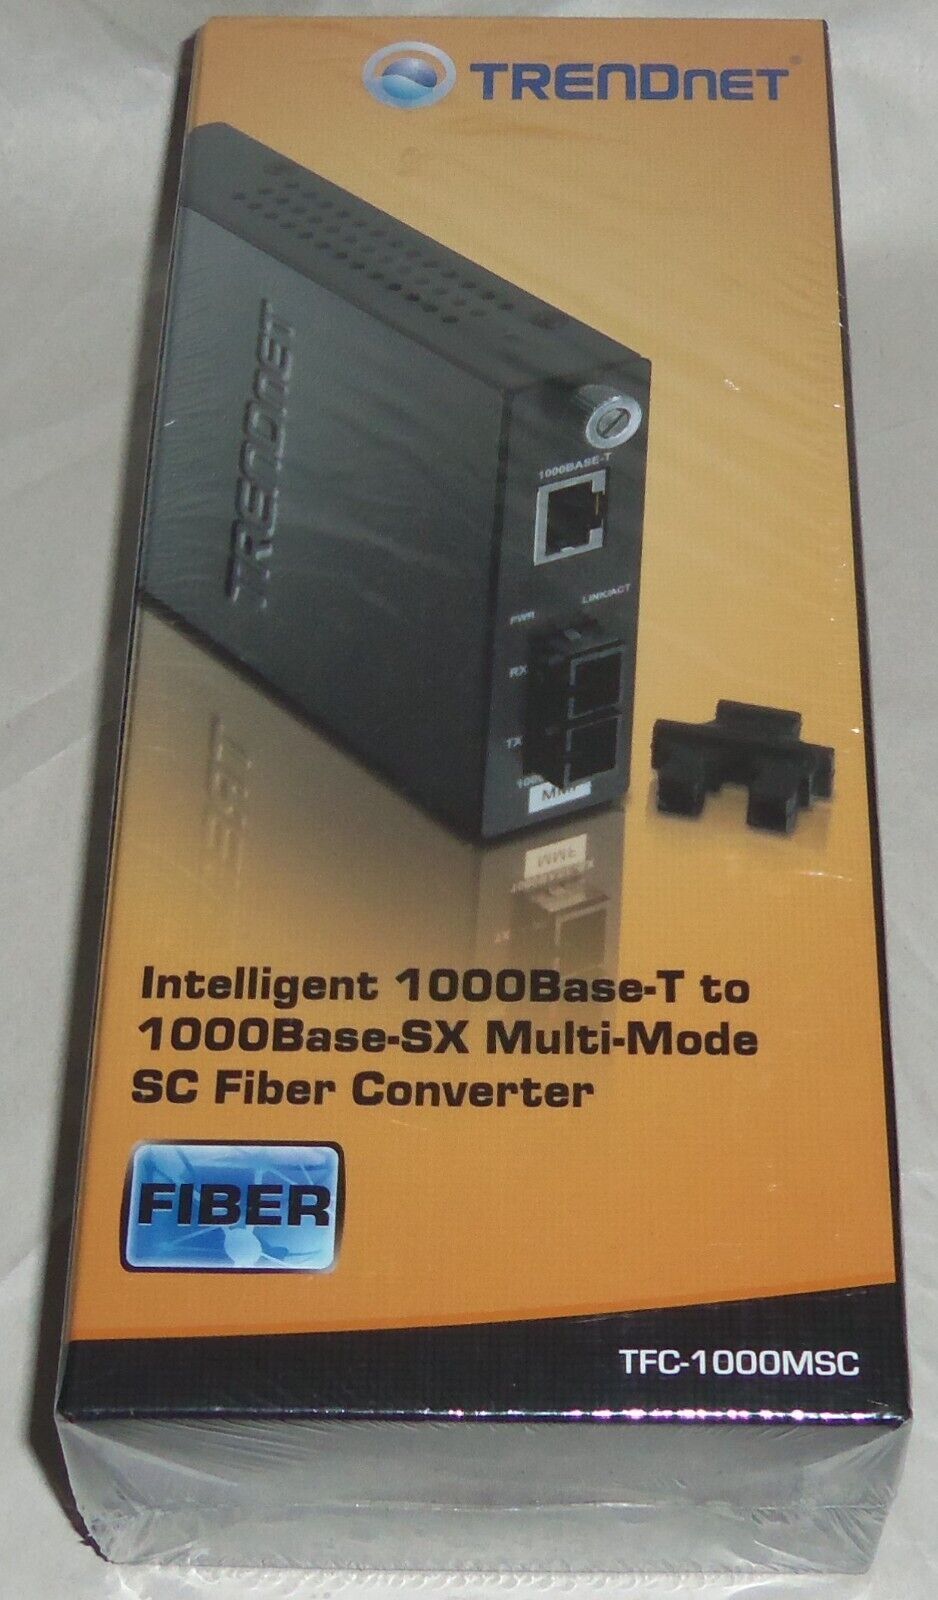 TRENDnet Intelligent 1000Base-T to 1000Base-SX MM SC Fiber Converter TFC-1000MSC